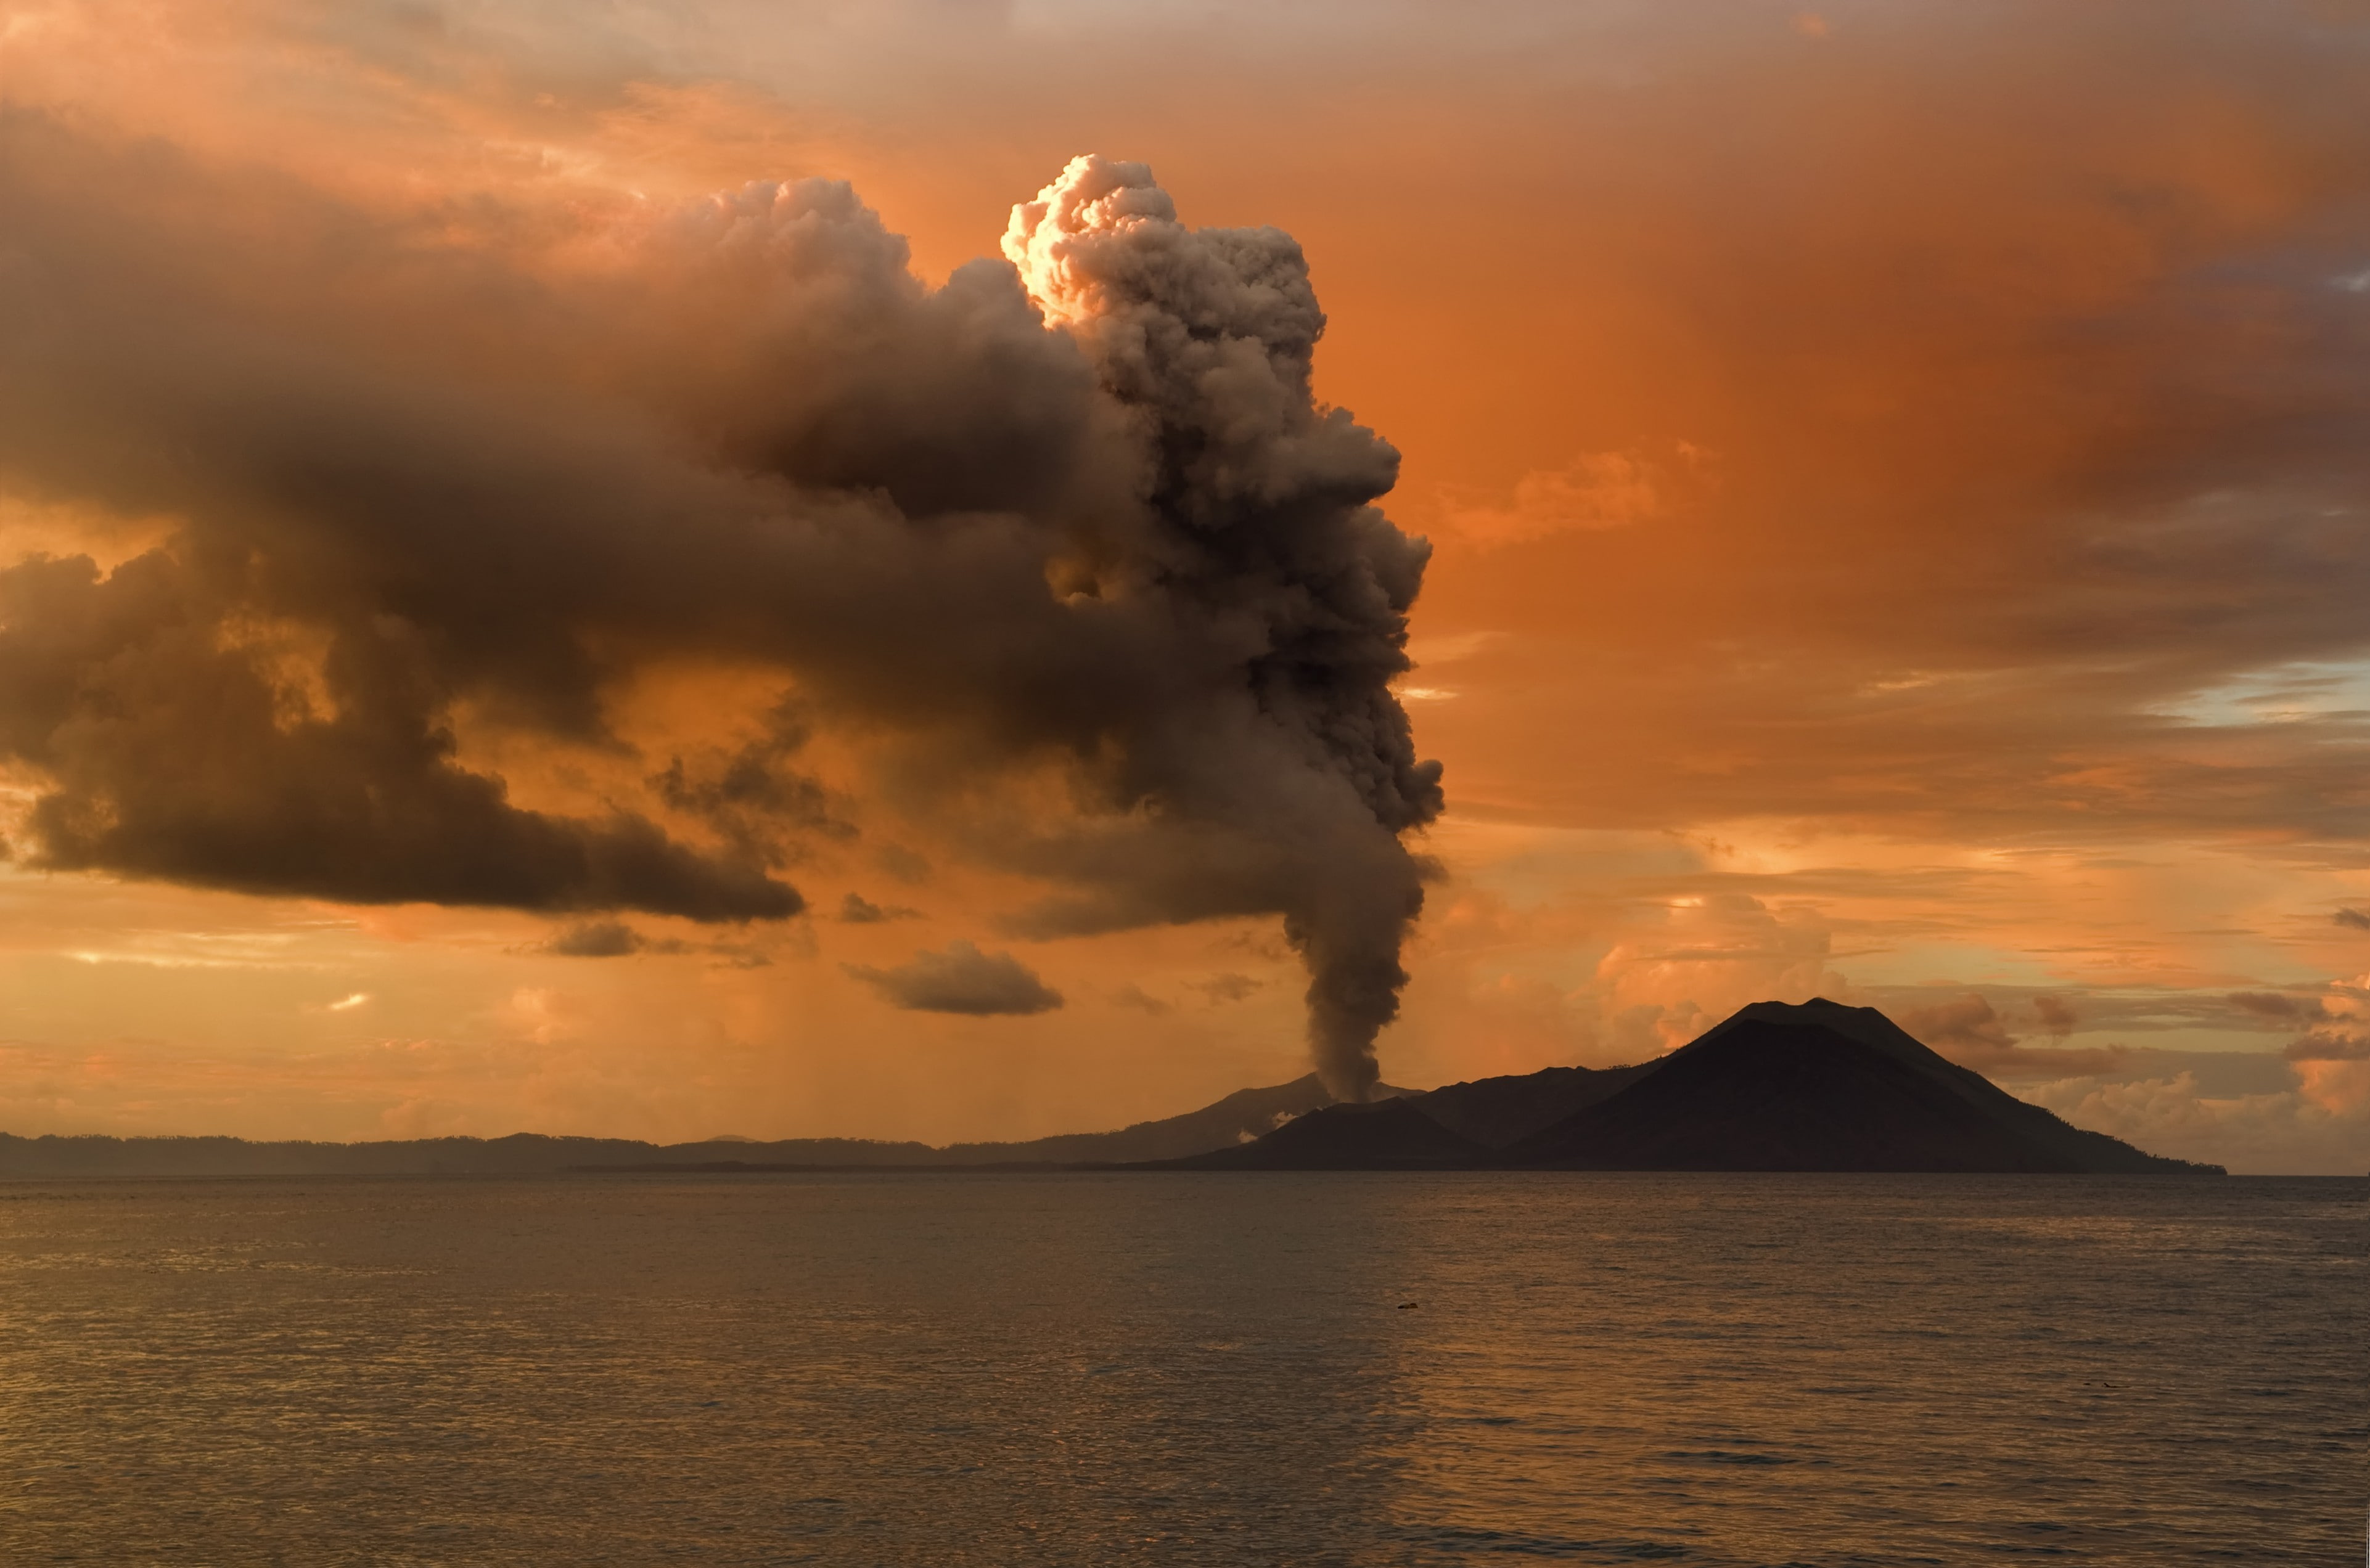 eruption, clouds, sea, volcano, trees, sunset, horizon, smoke